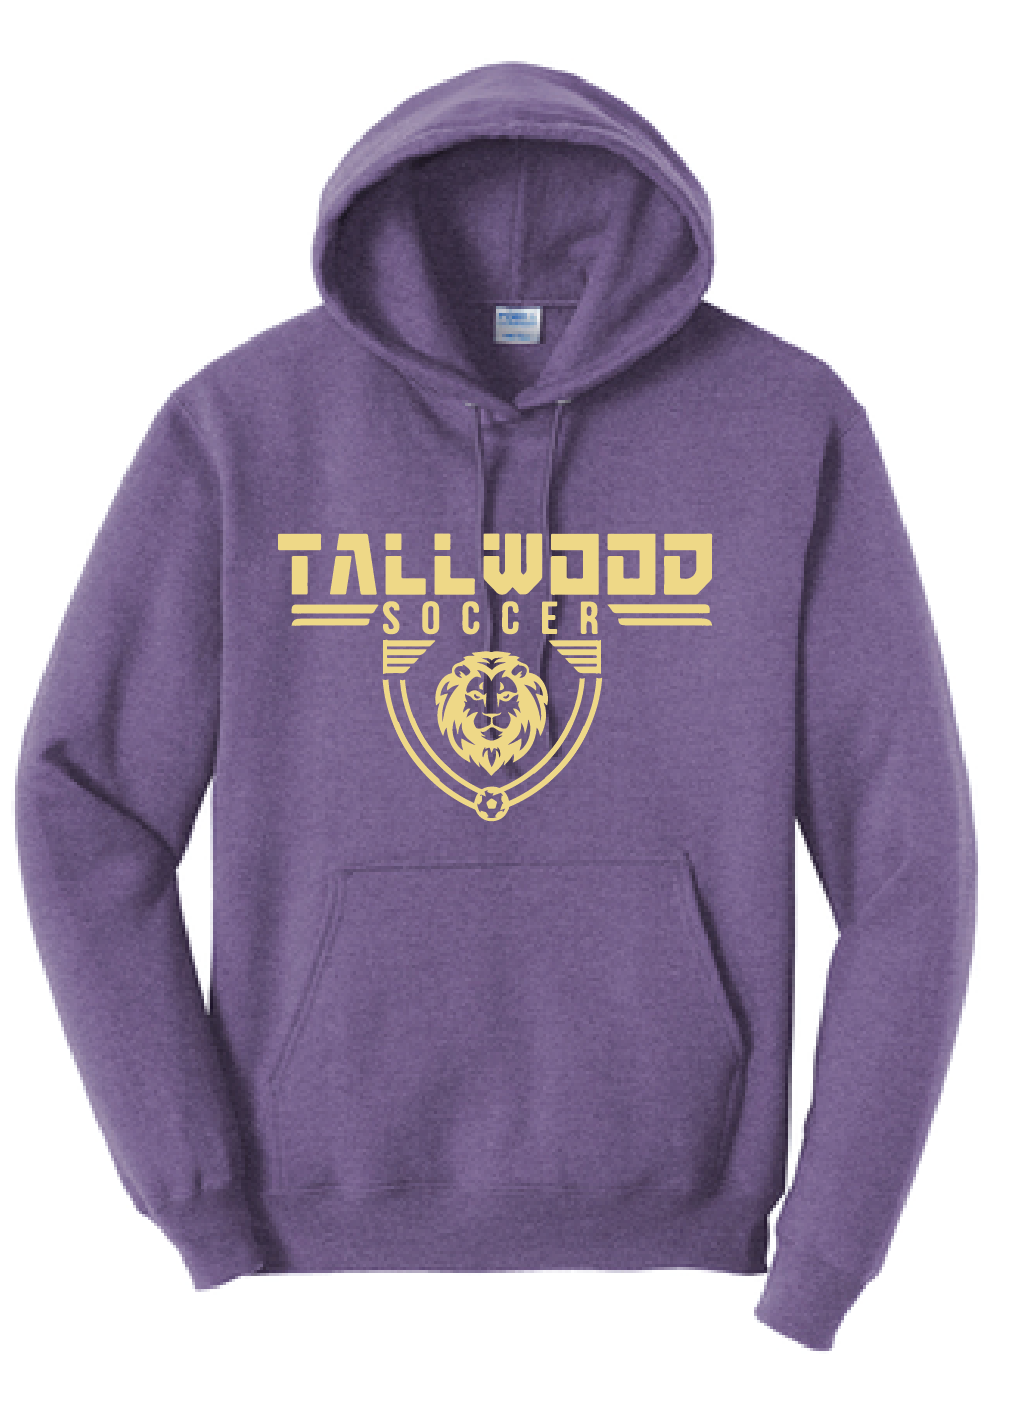 Fleece Hooded Sweatshirt / Heather Purple / Tallwood High School Soccer